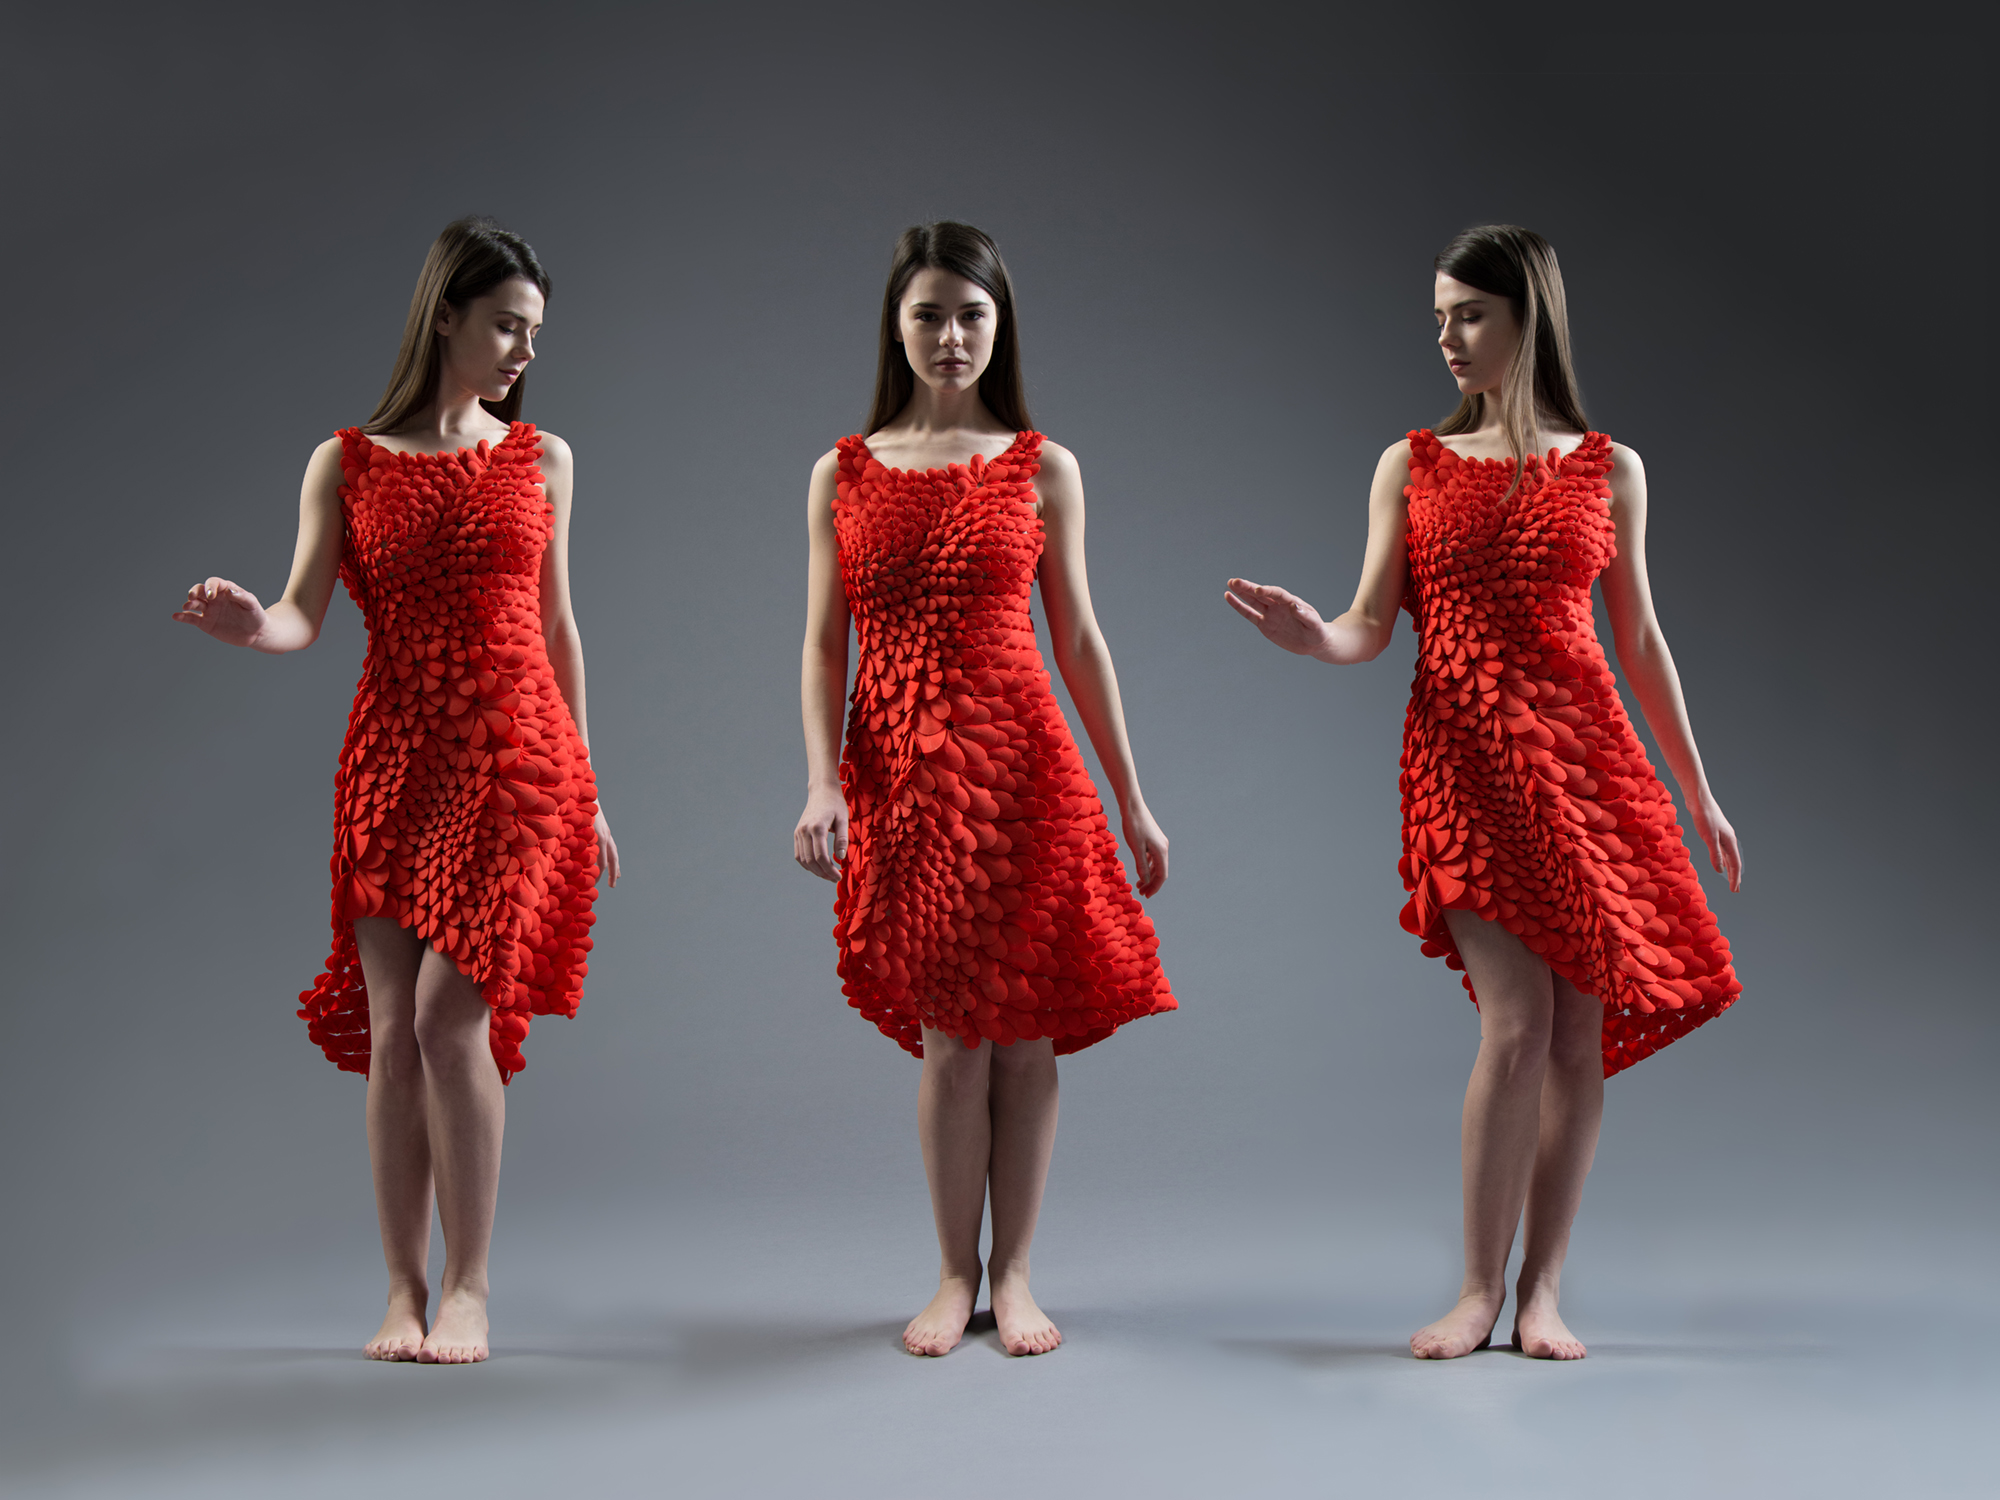 Kinematic Petals Dress debuts at MFA – Nervous System blog